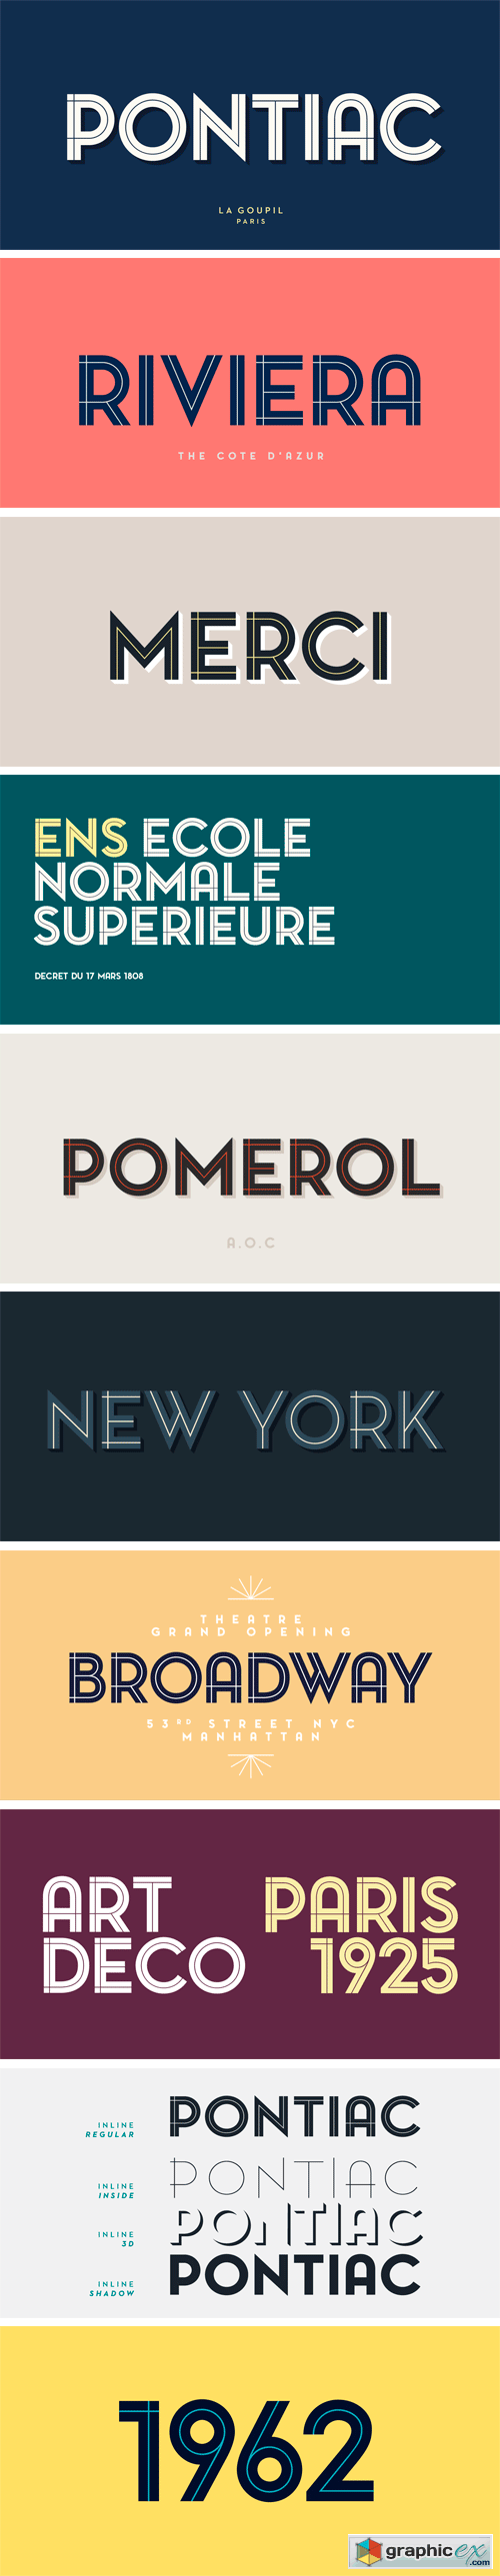 Pontiac Inline Font Family - 4 Fonts